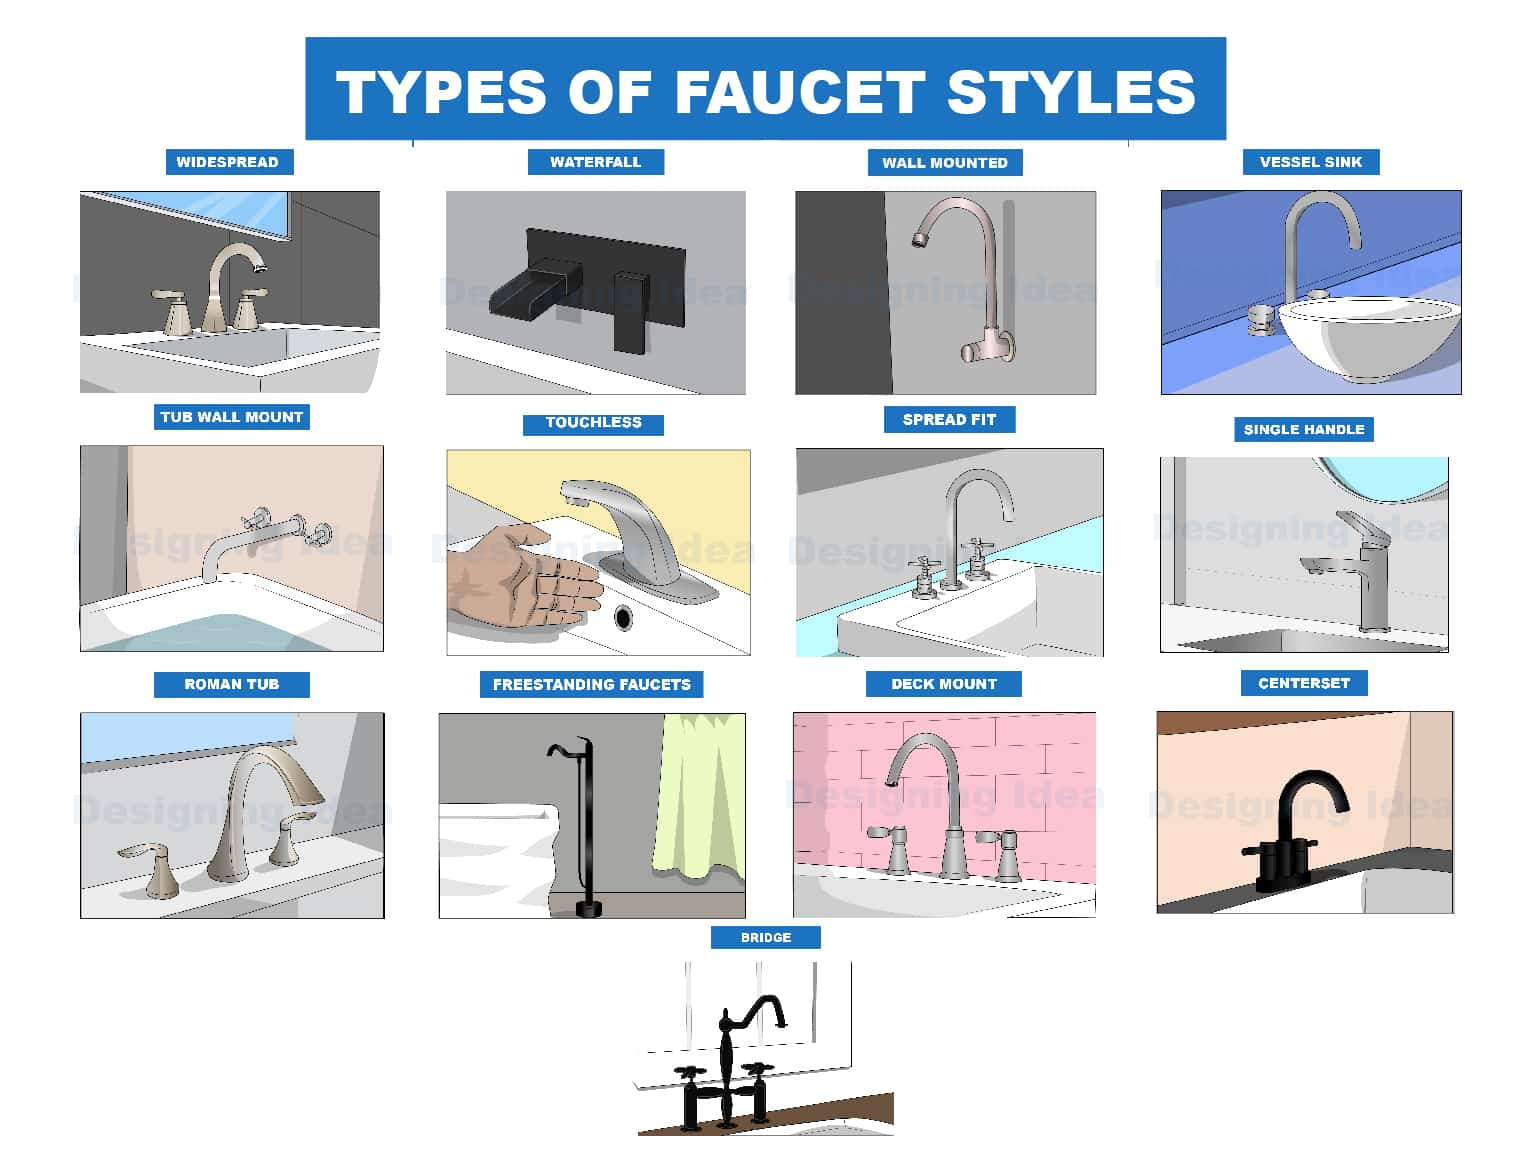 Faucet design styles